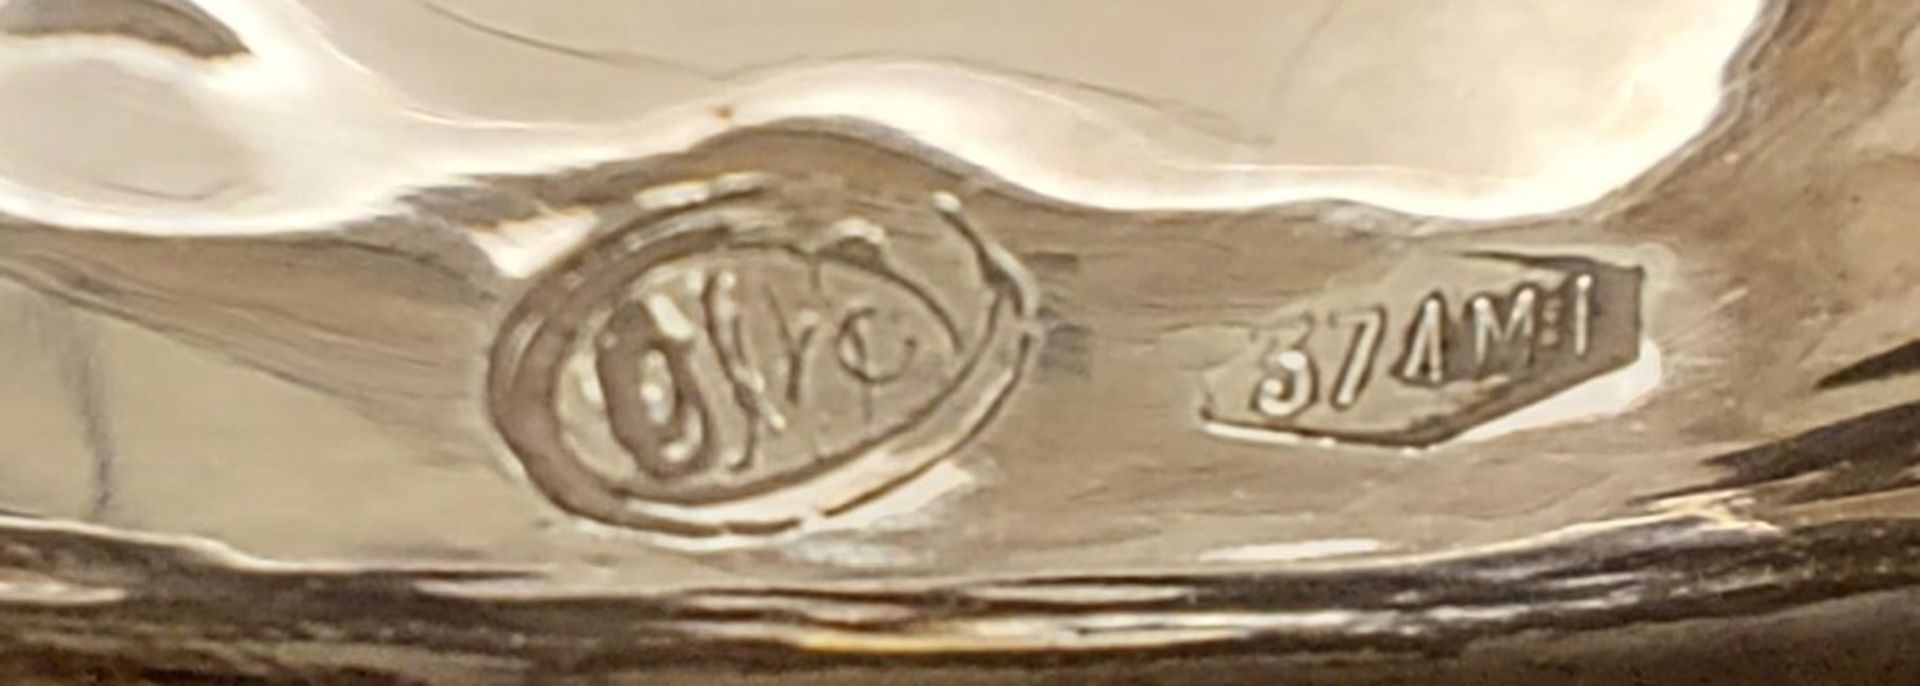 Grande centrotavola a 8 punte in argento cesellato con punzone 347Mi Arioli Piero Milano - Image 7 of 8